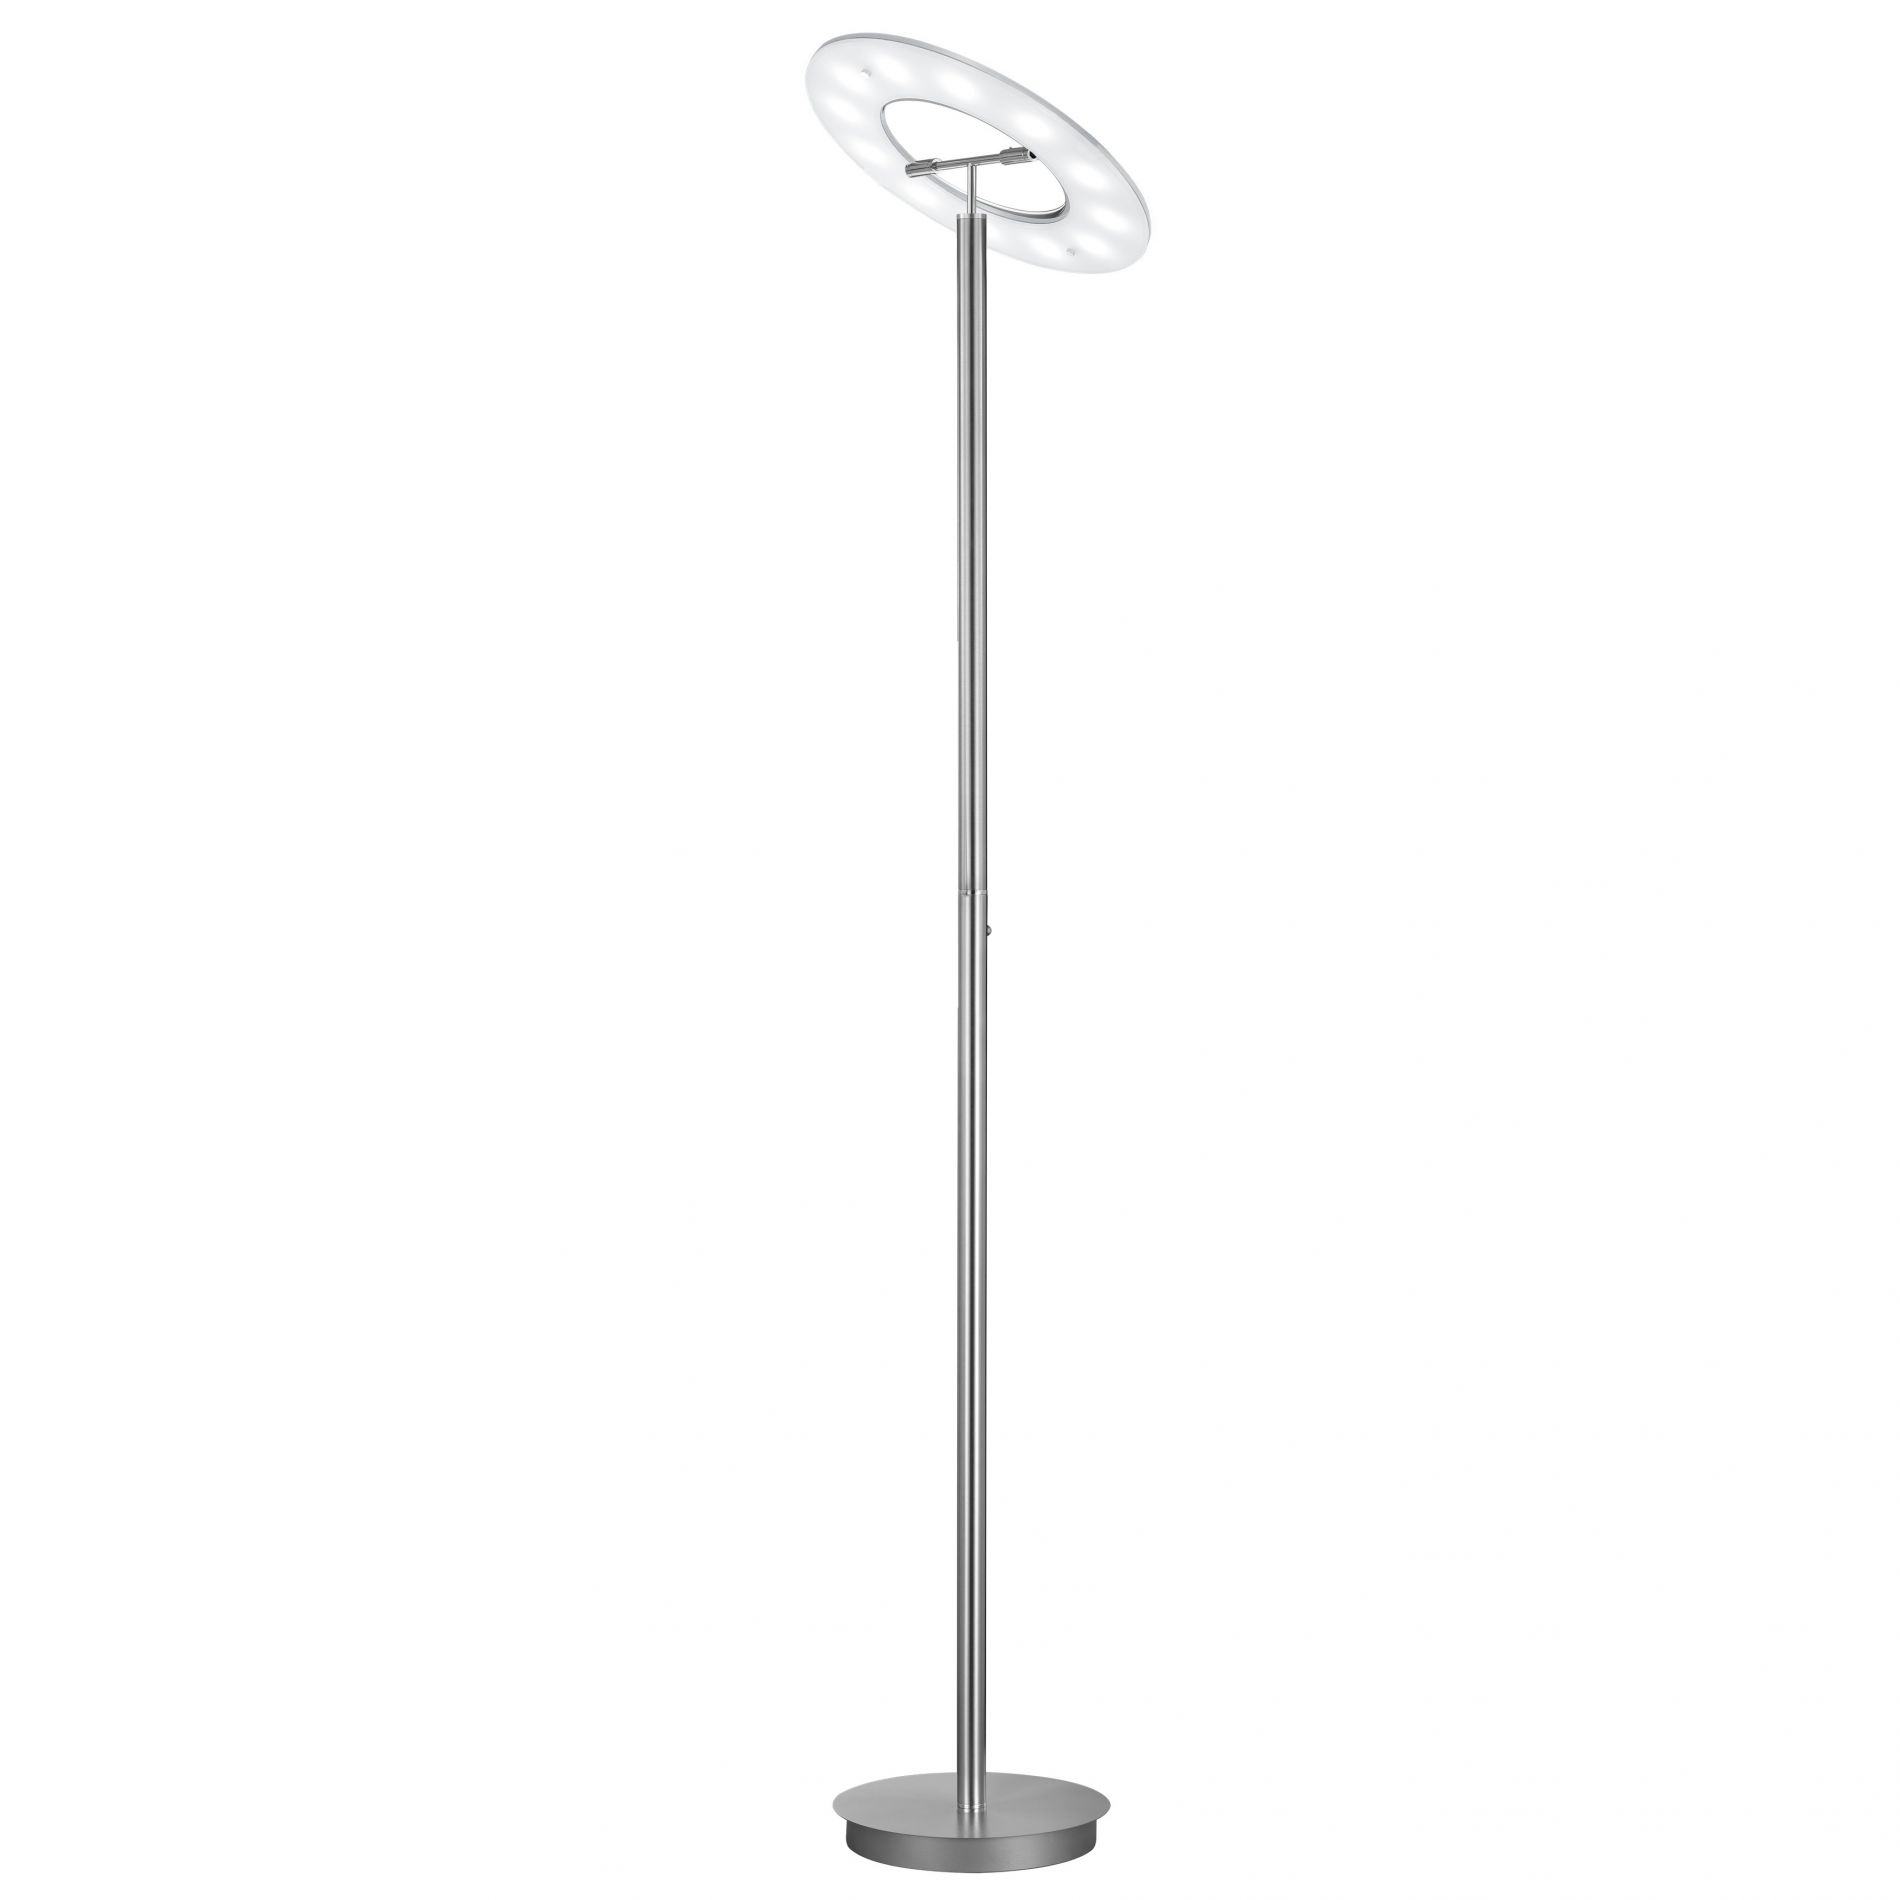 Valastro Lighting-Lampadaire Led lampadaire moderne métal nickel intérieur  salon